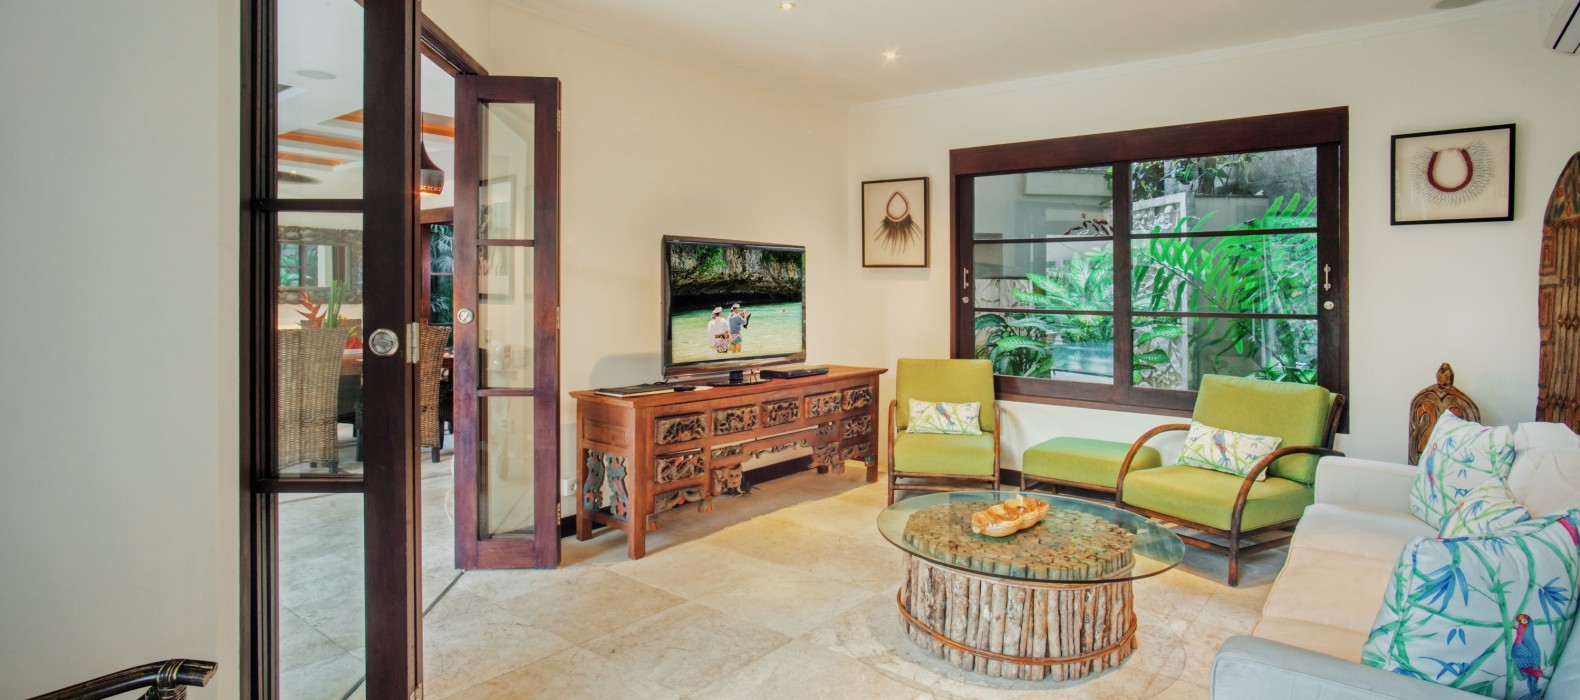 Living room of Villa Amaia in Bali